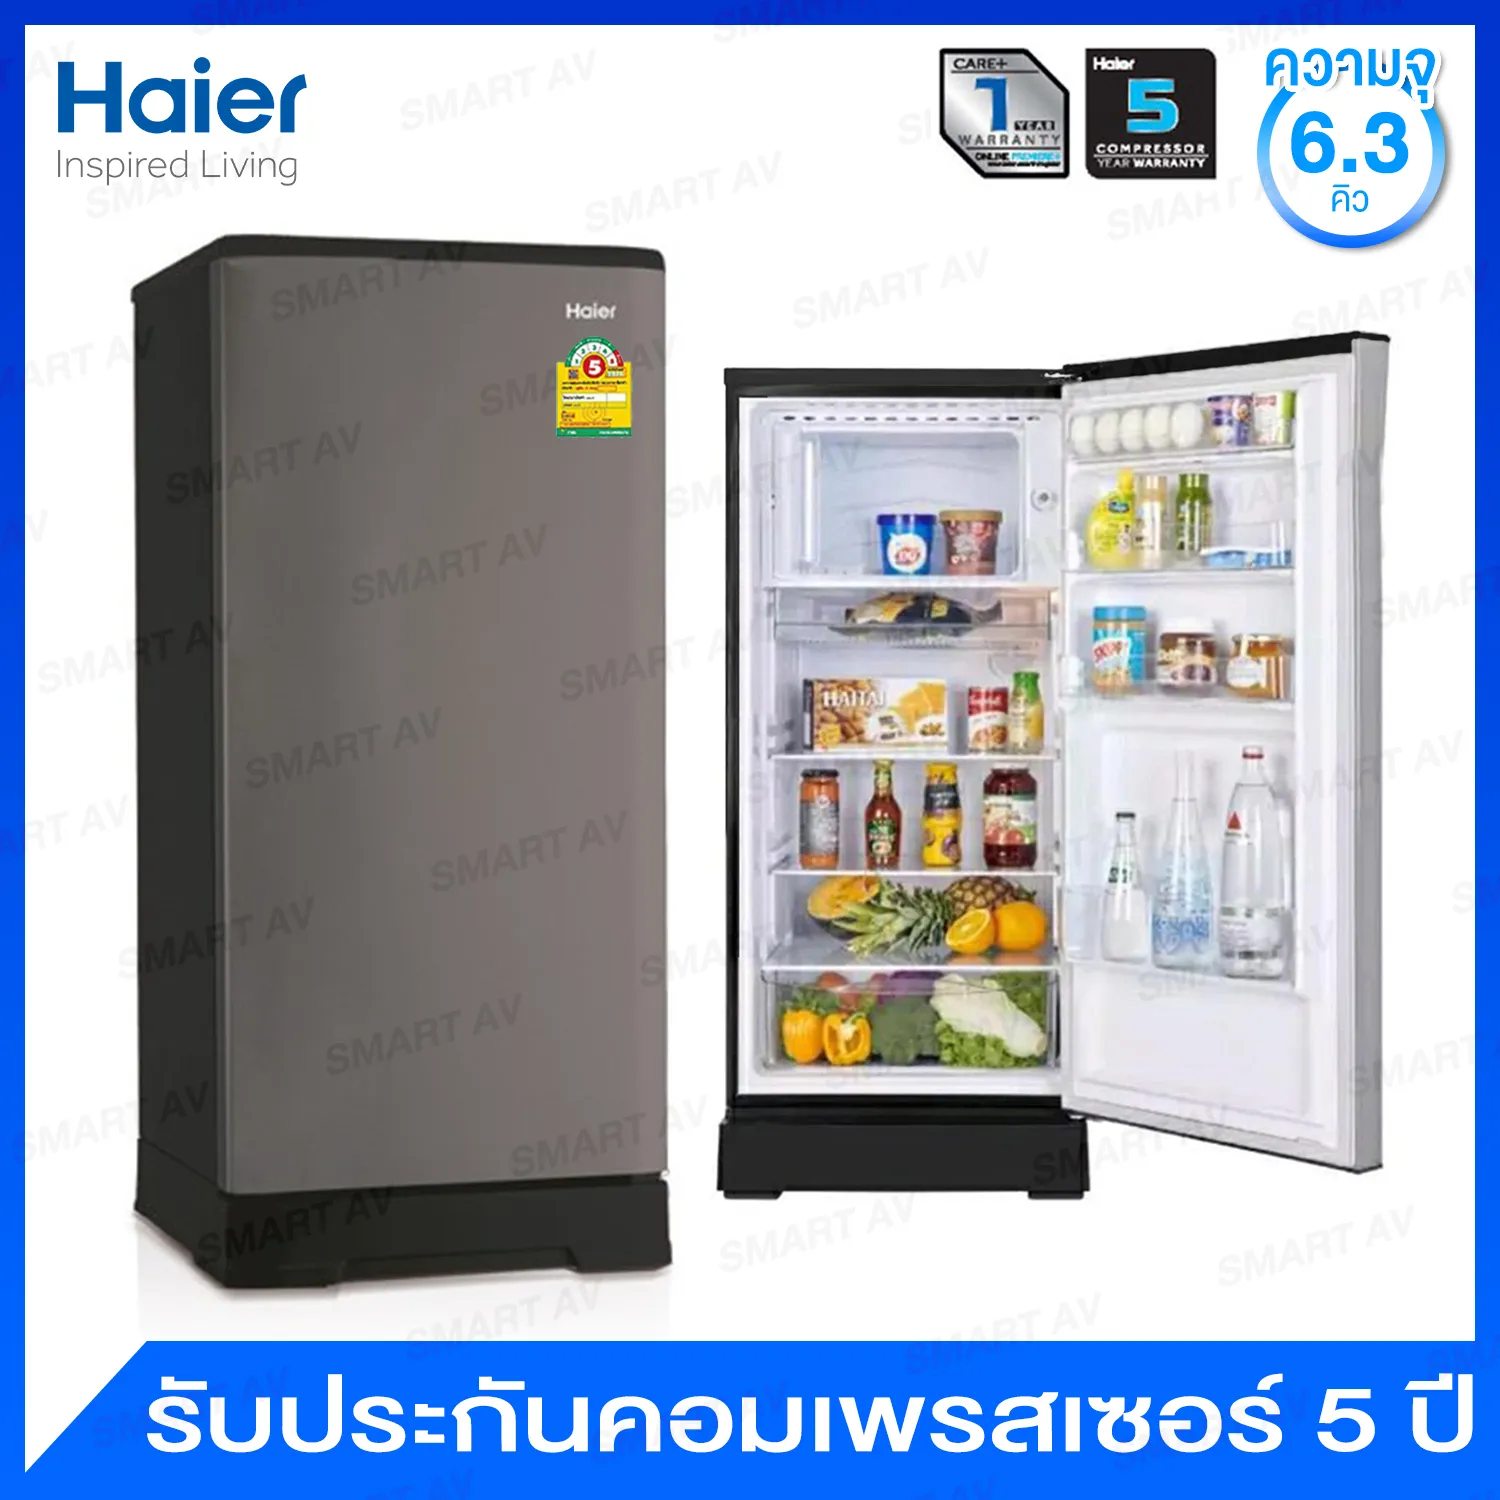 Haier ตู้เย็น 1 ประตู ความจุ 6.3 คิว รุ่น HR-ADBX18-CS (สีเทา)